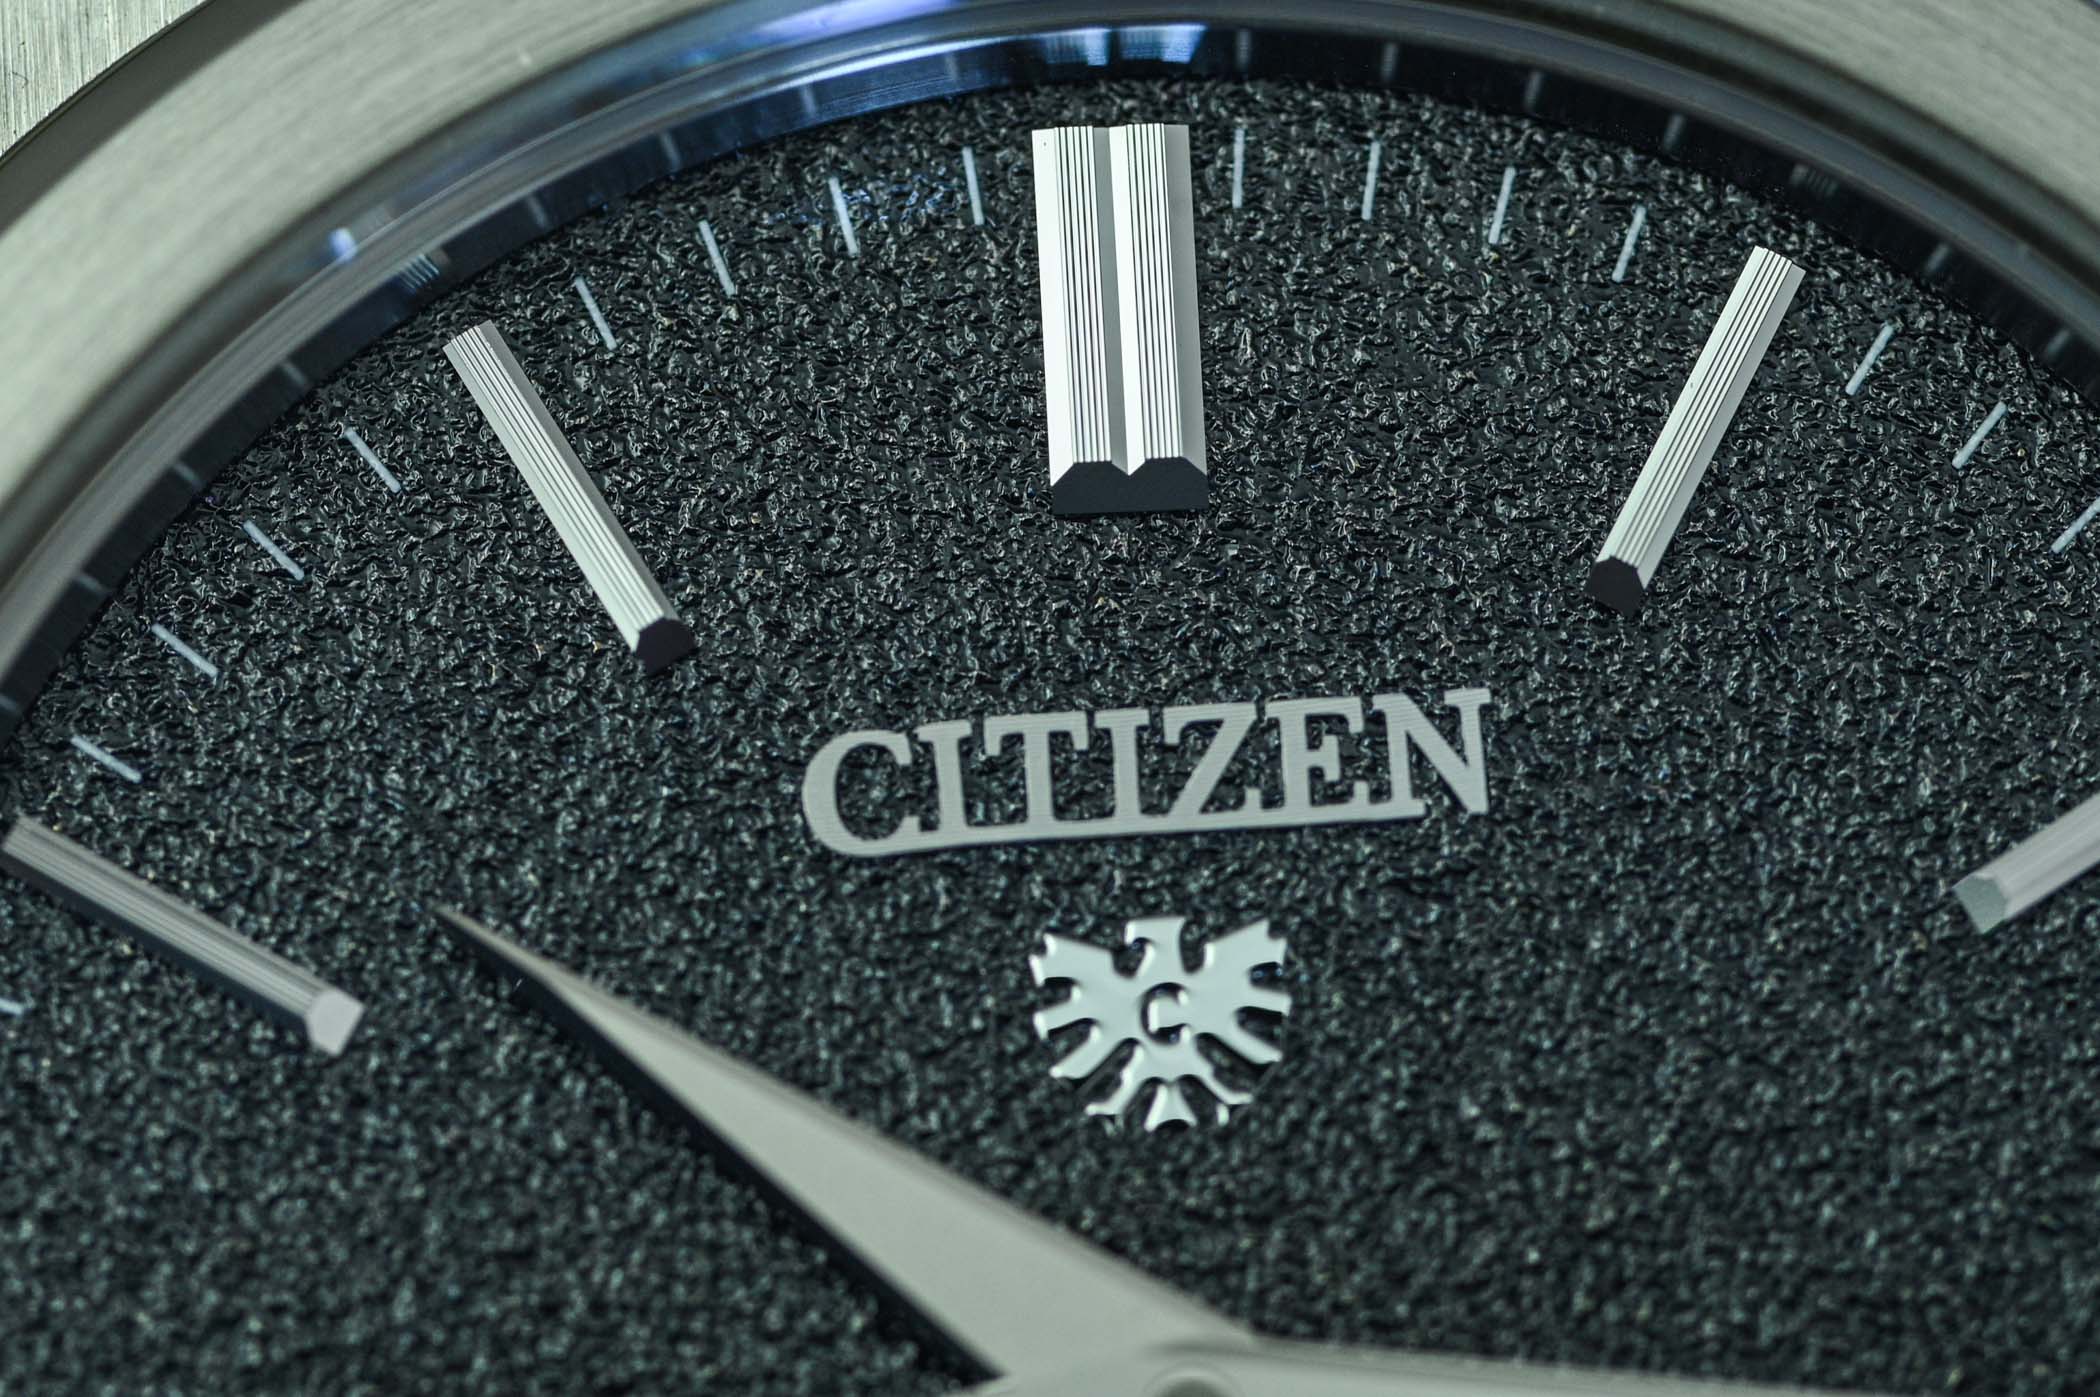 The Citizen Caliber 0200